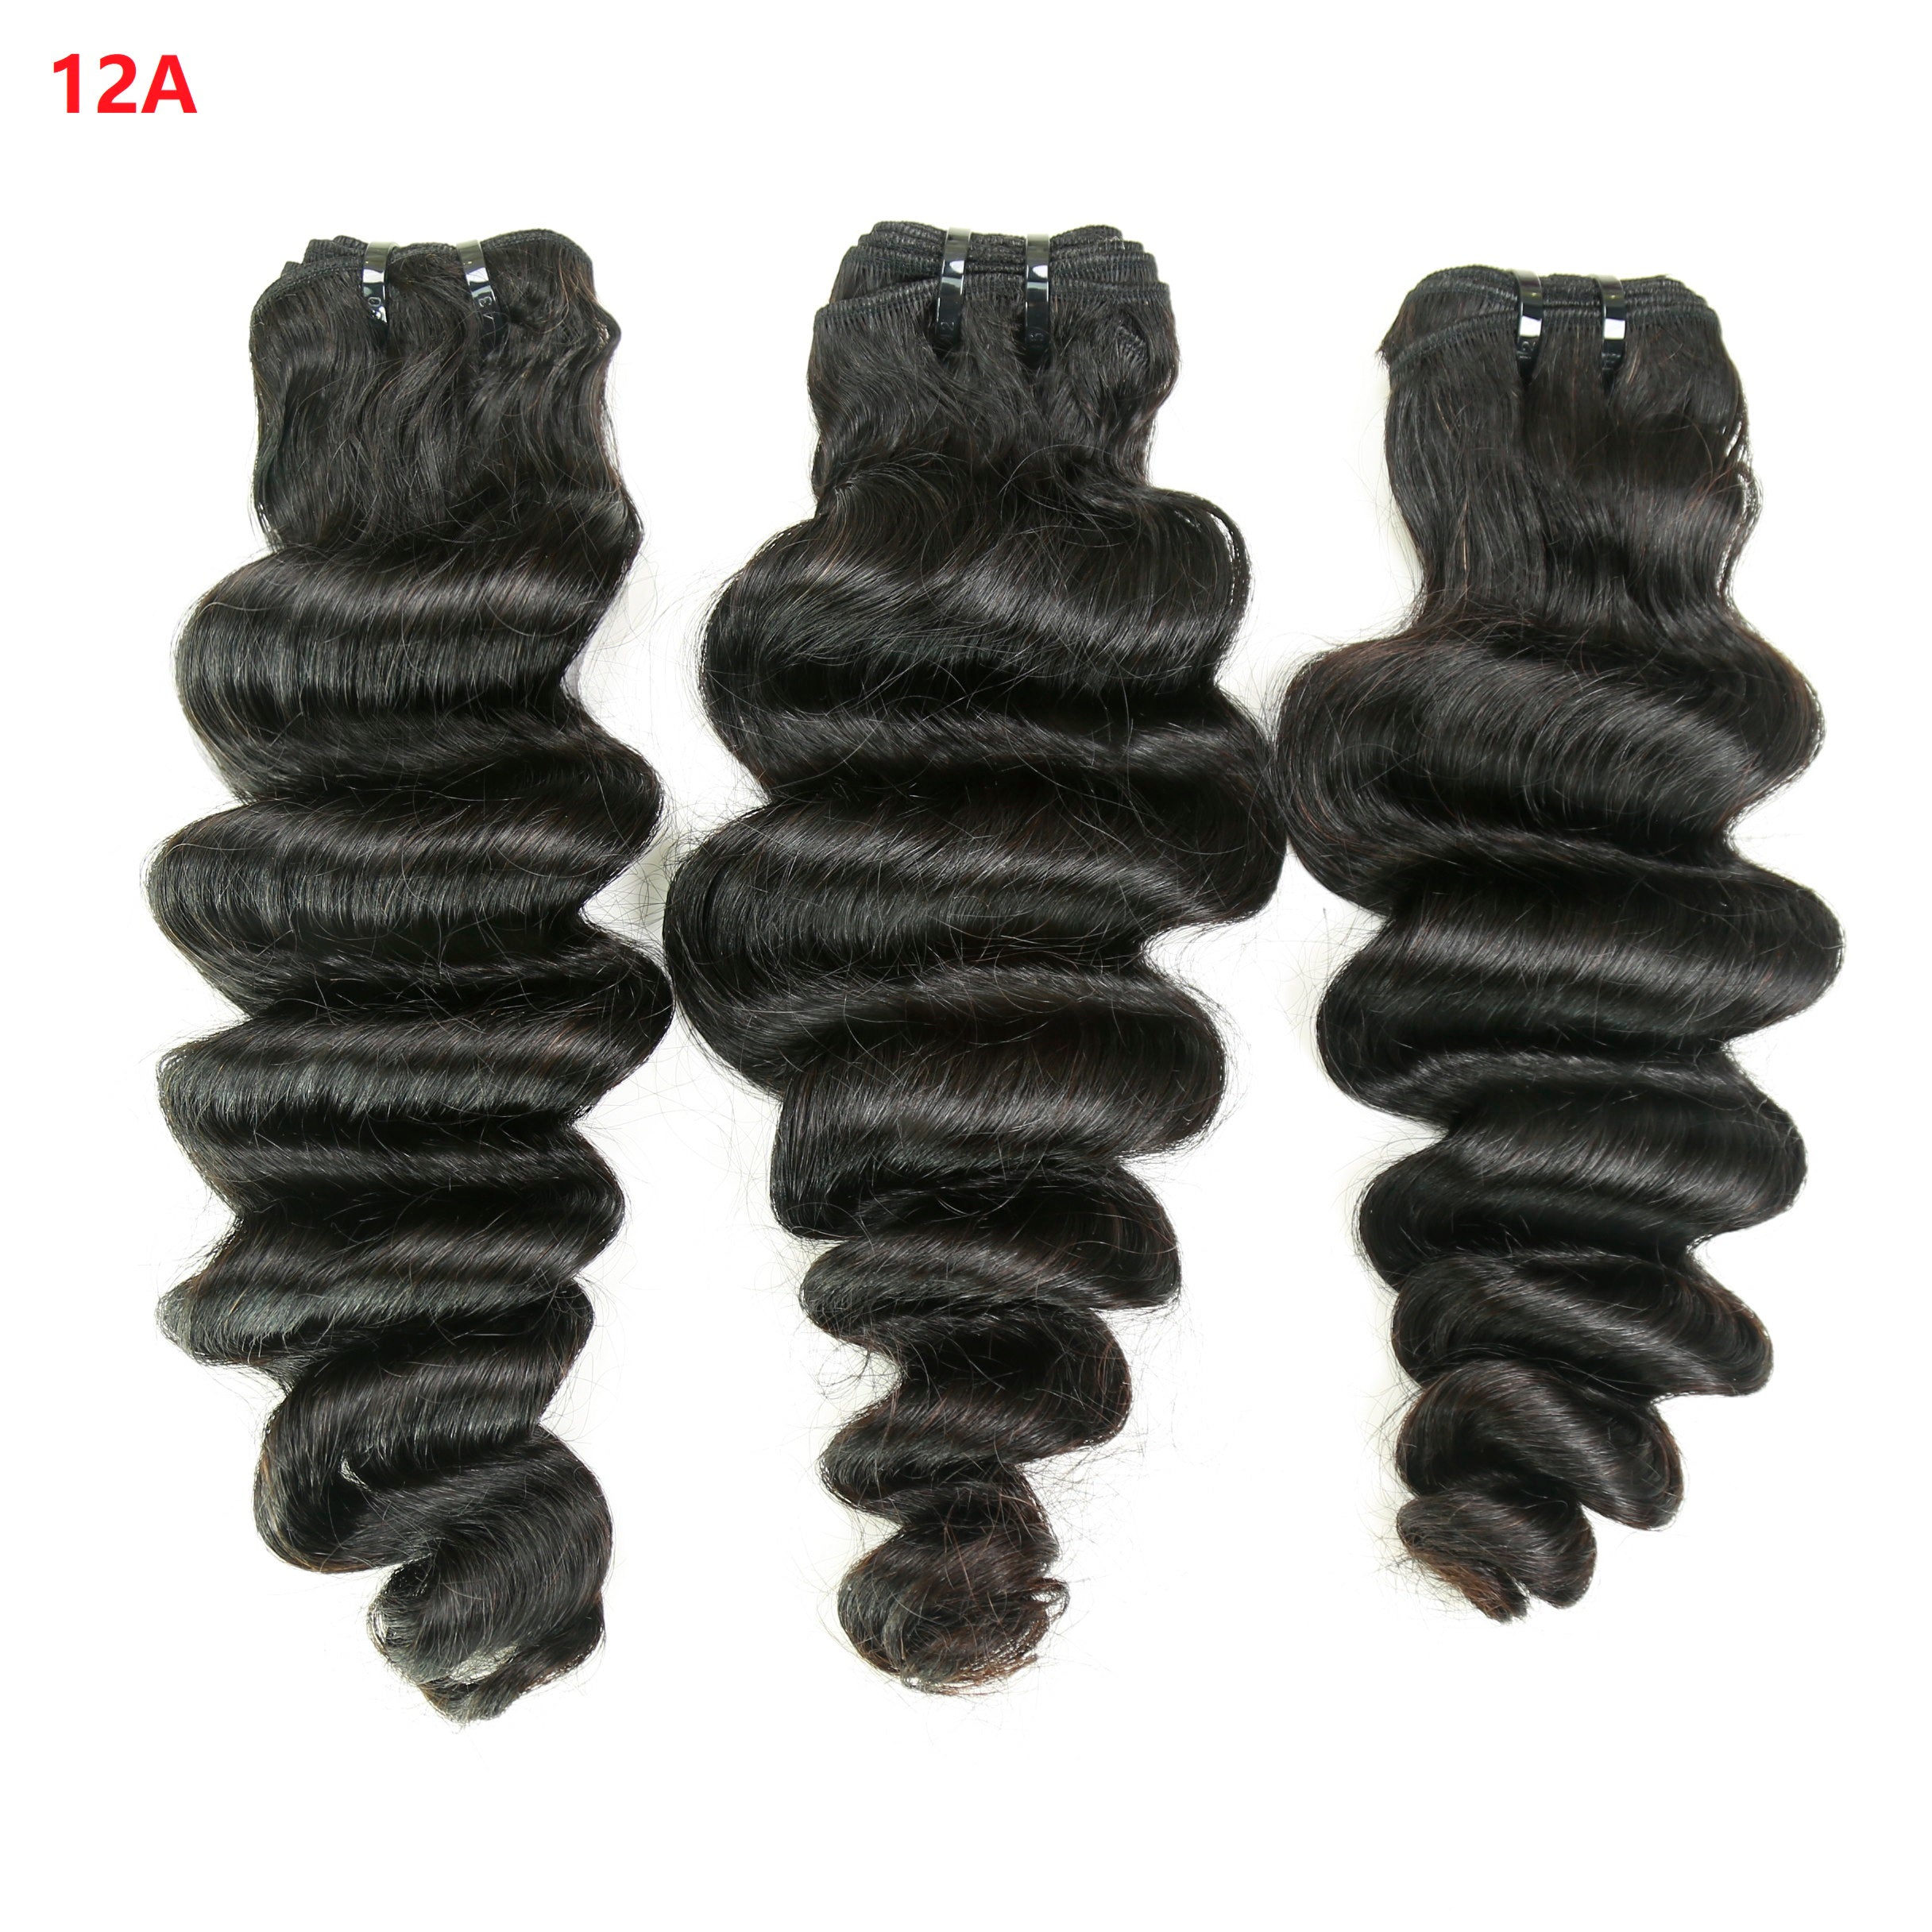 XBL Hair 9A/10A12A 5x5 Lace Closure with 3 Bundles Loose Deep Virgin Human Hair Bundles